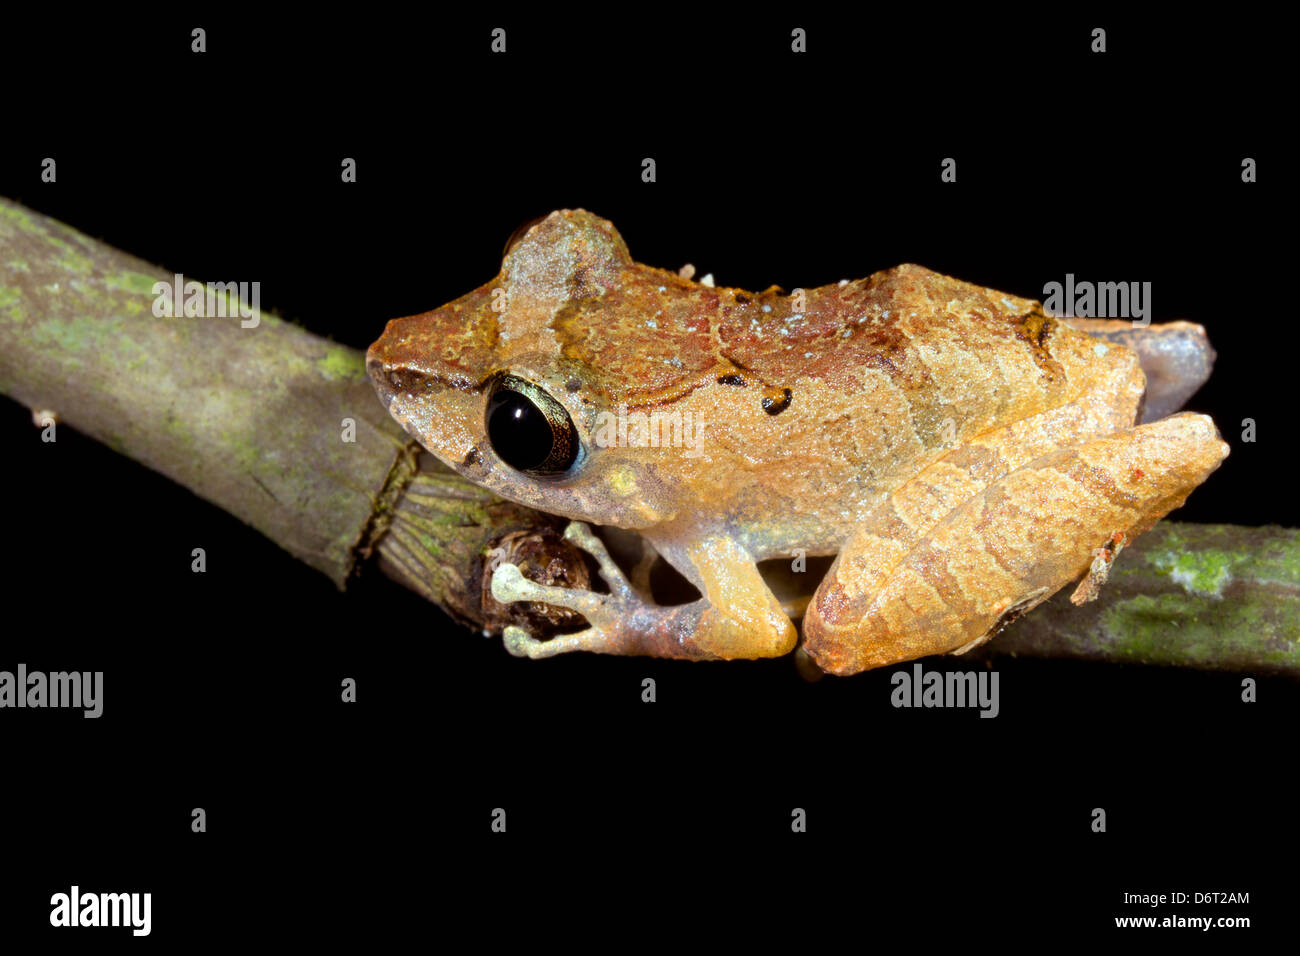 Rain Frog (Pristimantis ockendeni) on a stick in the rainforest, Ecuador Stock Photo